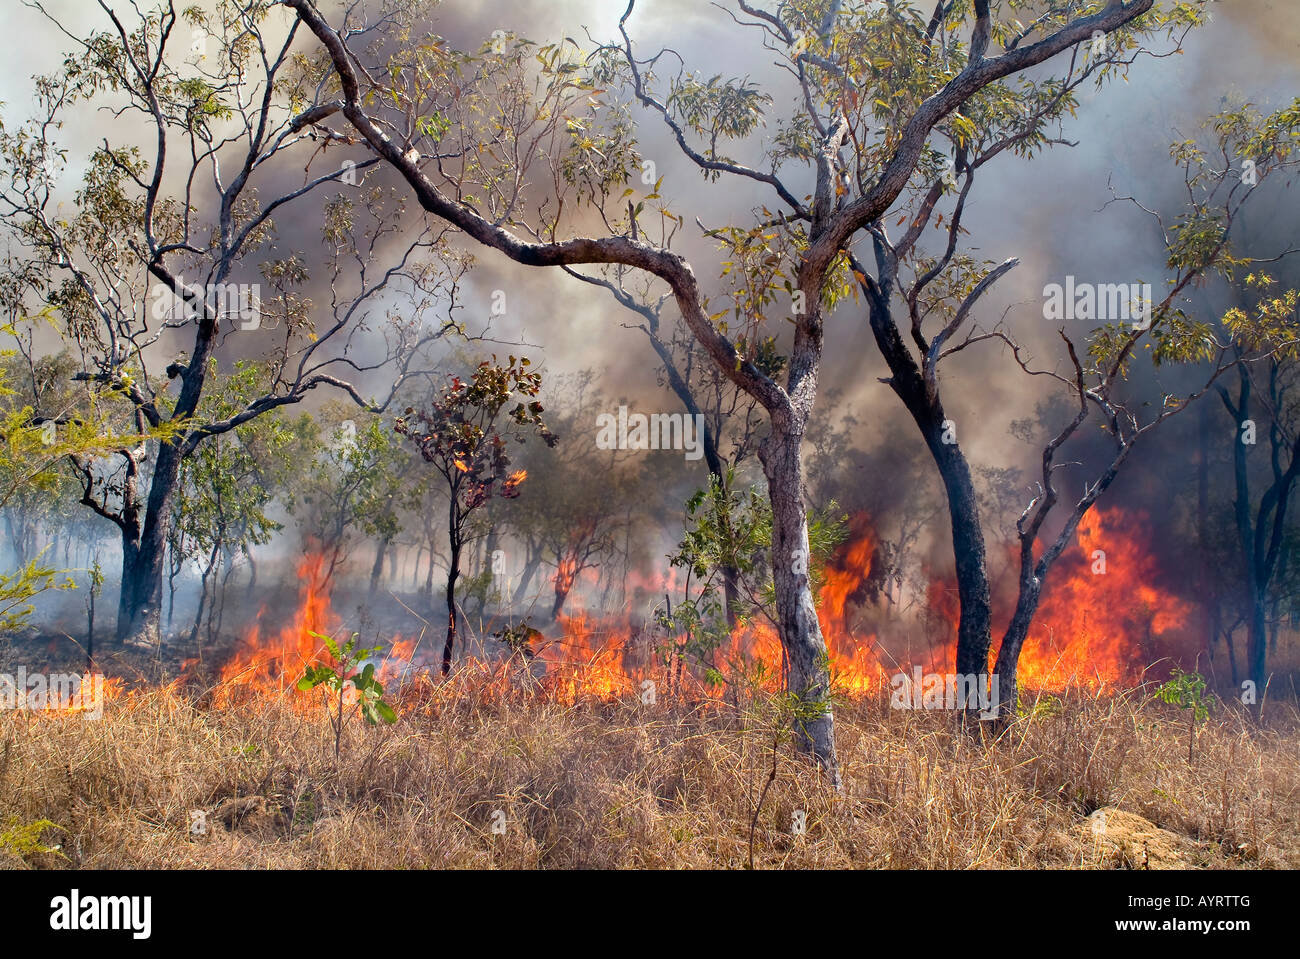 Bush fire, forest fire in Western Australia, Australia Stock Photo